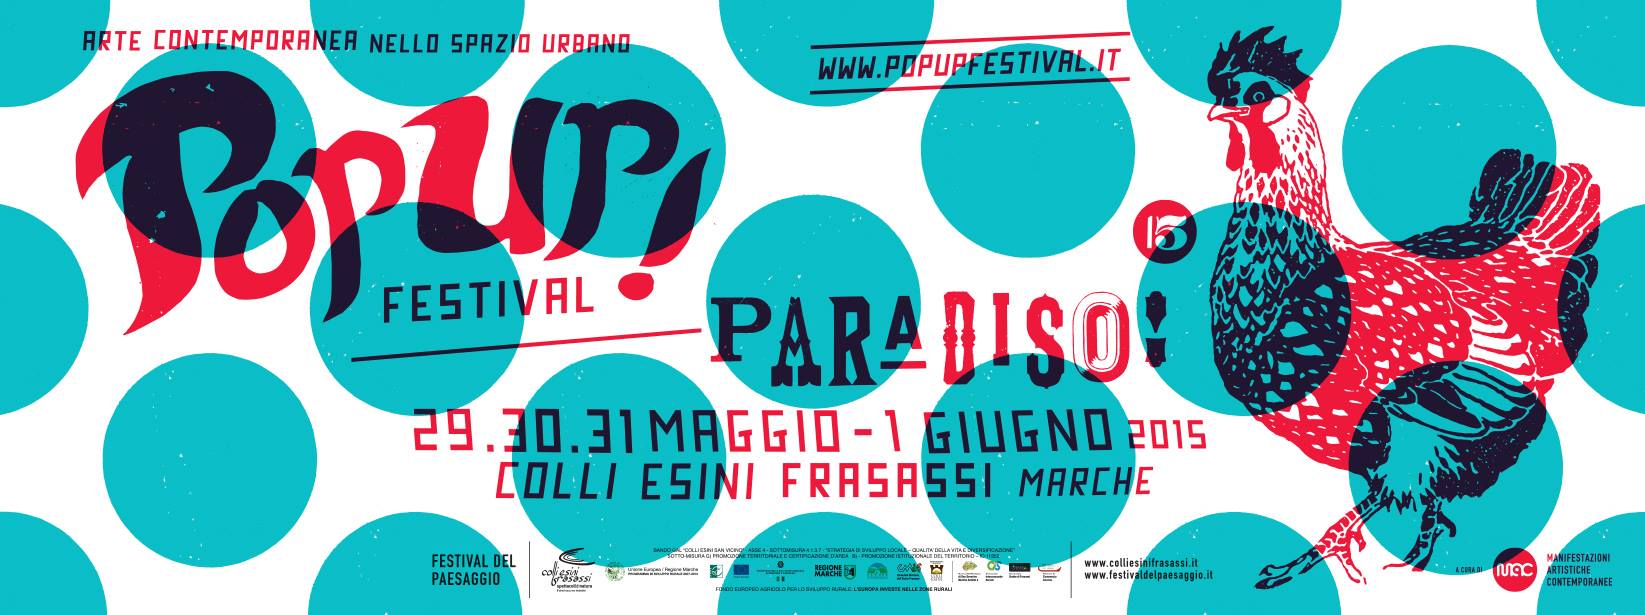 POPUP! Festival 2015 PARADISO